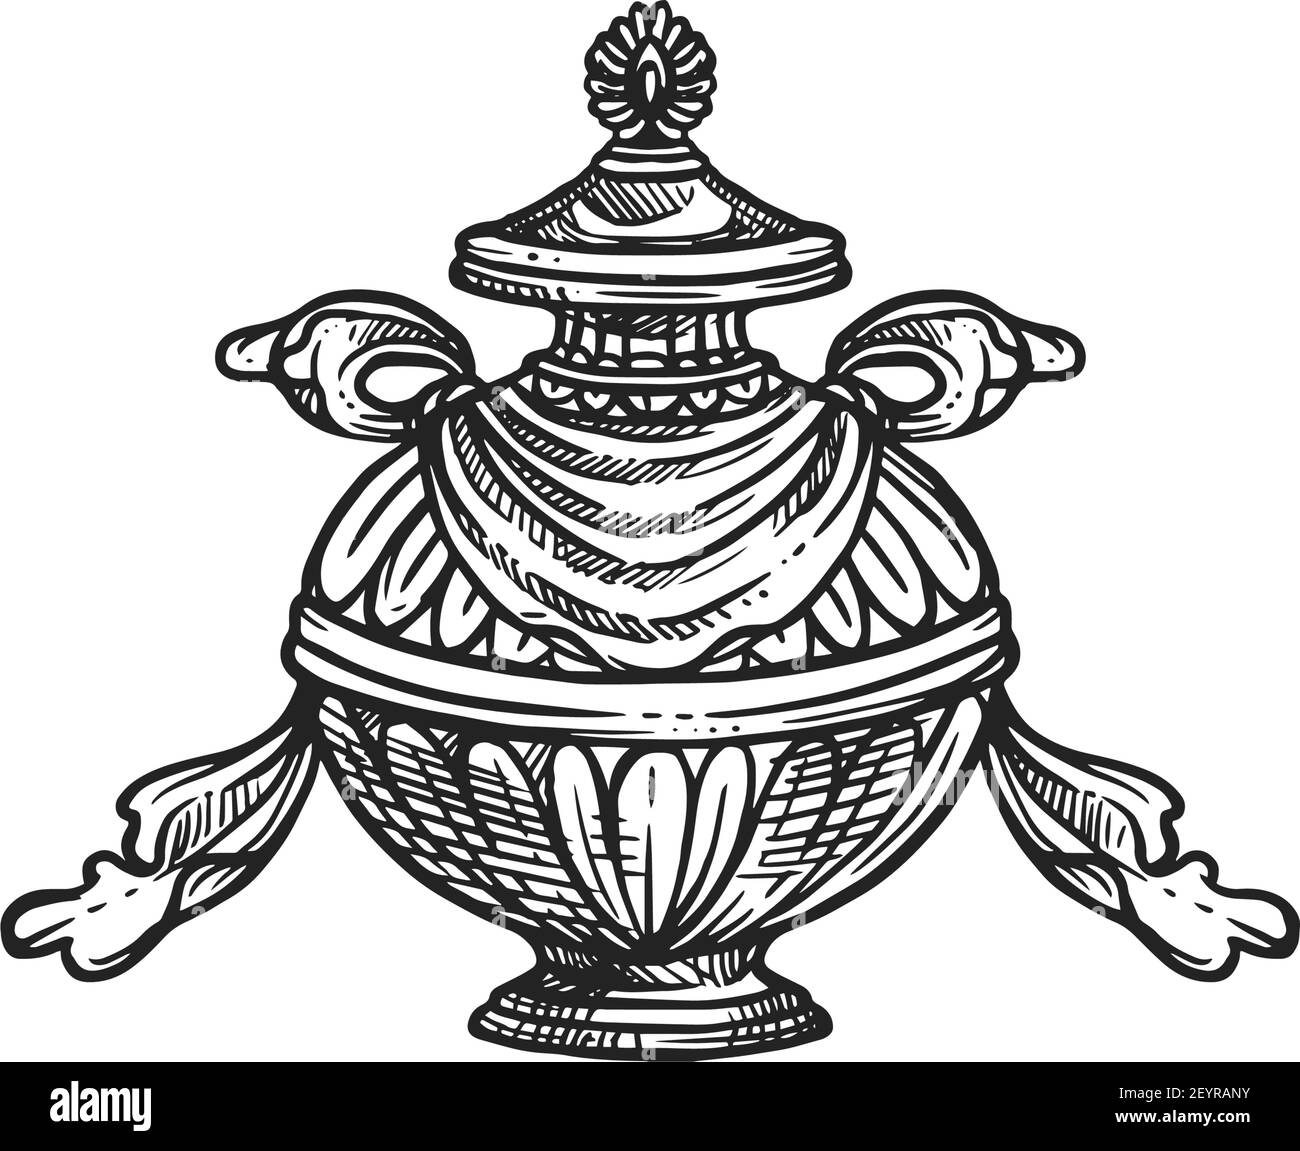 vase symbolism